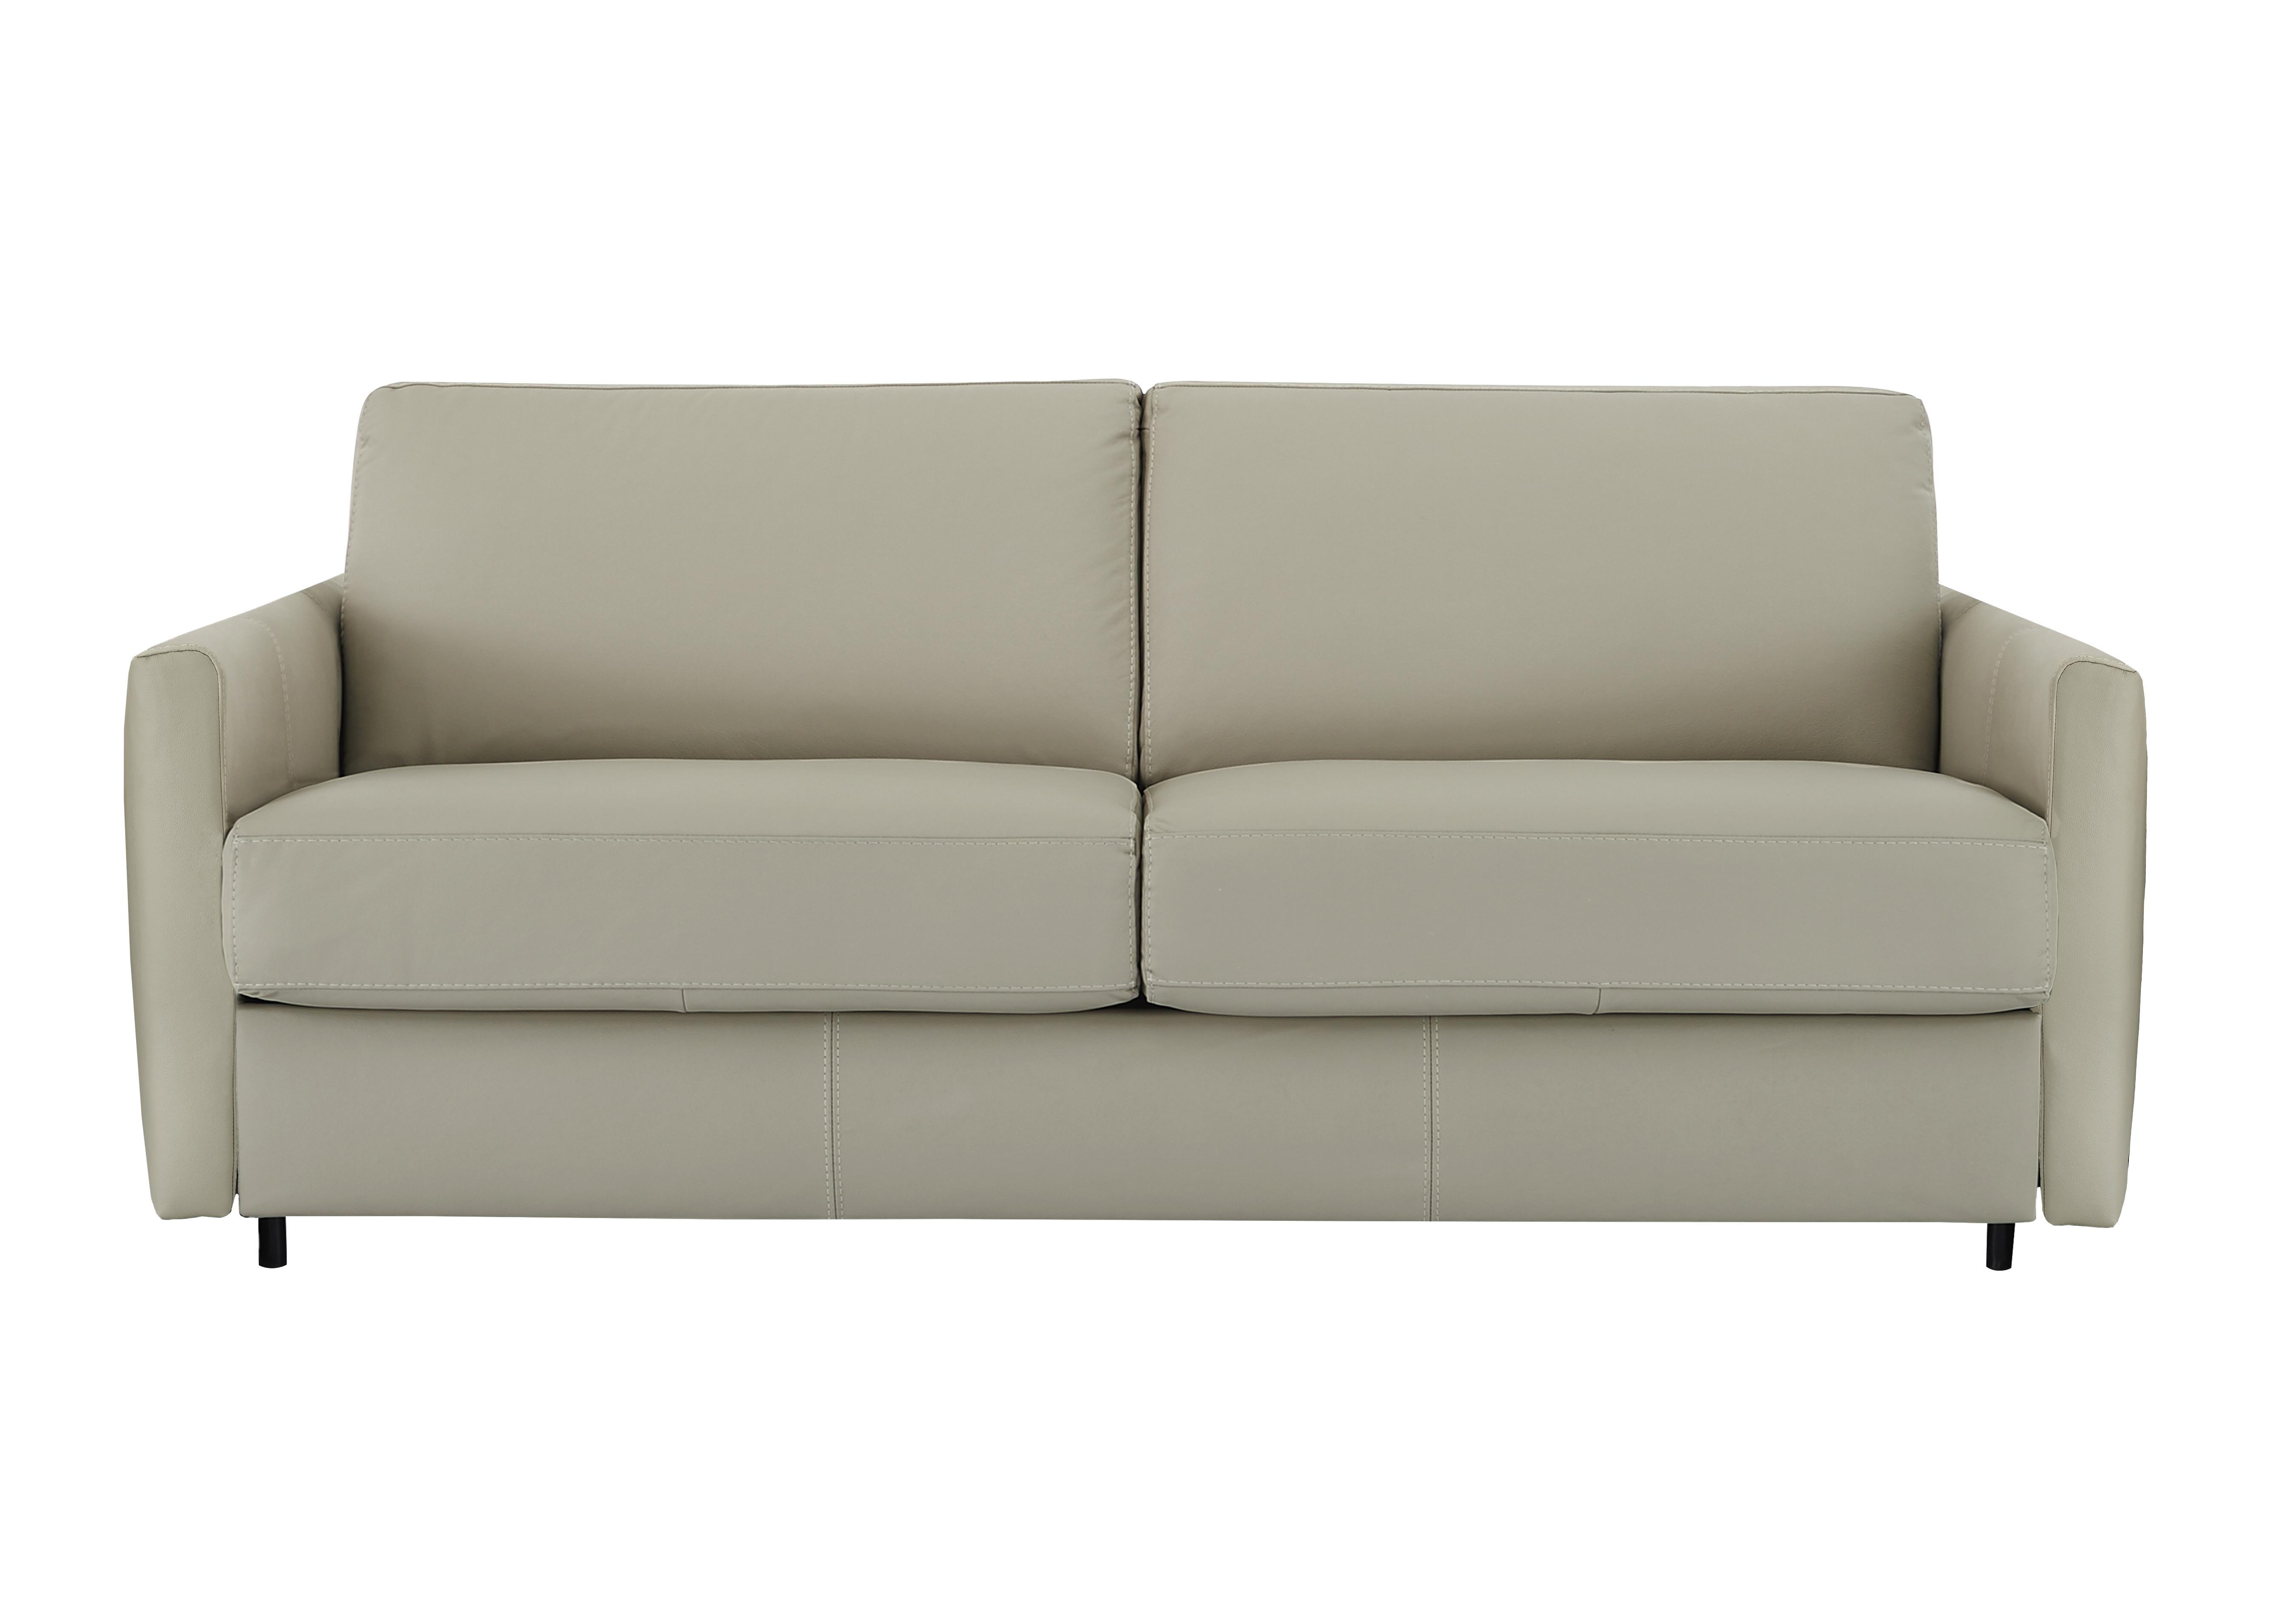 Alcova 3 Seater Leather Sofa Bed with Slim Arms in Torello Tortora 328 on Furniture Village